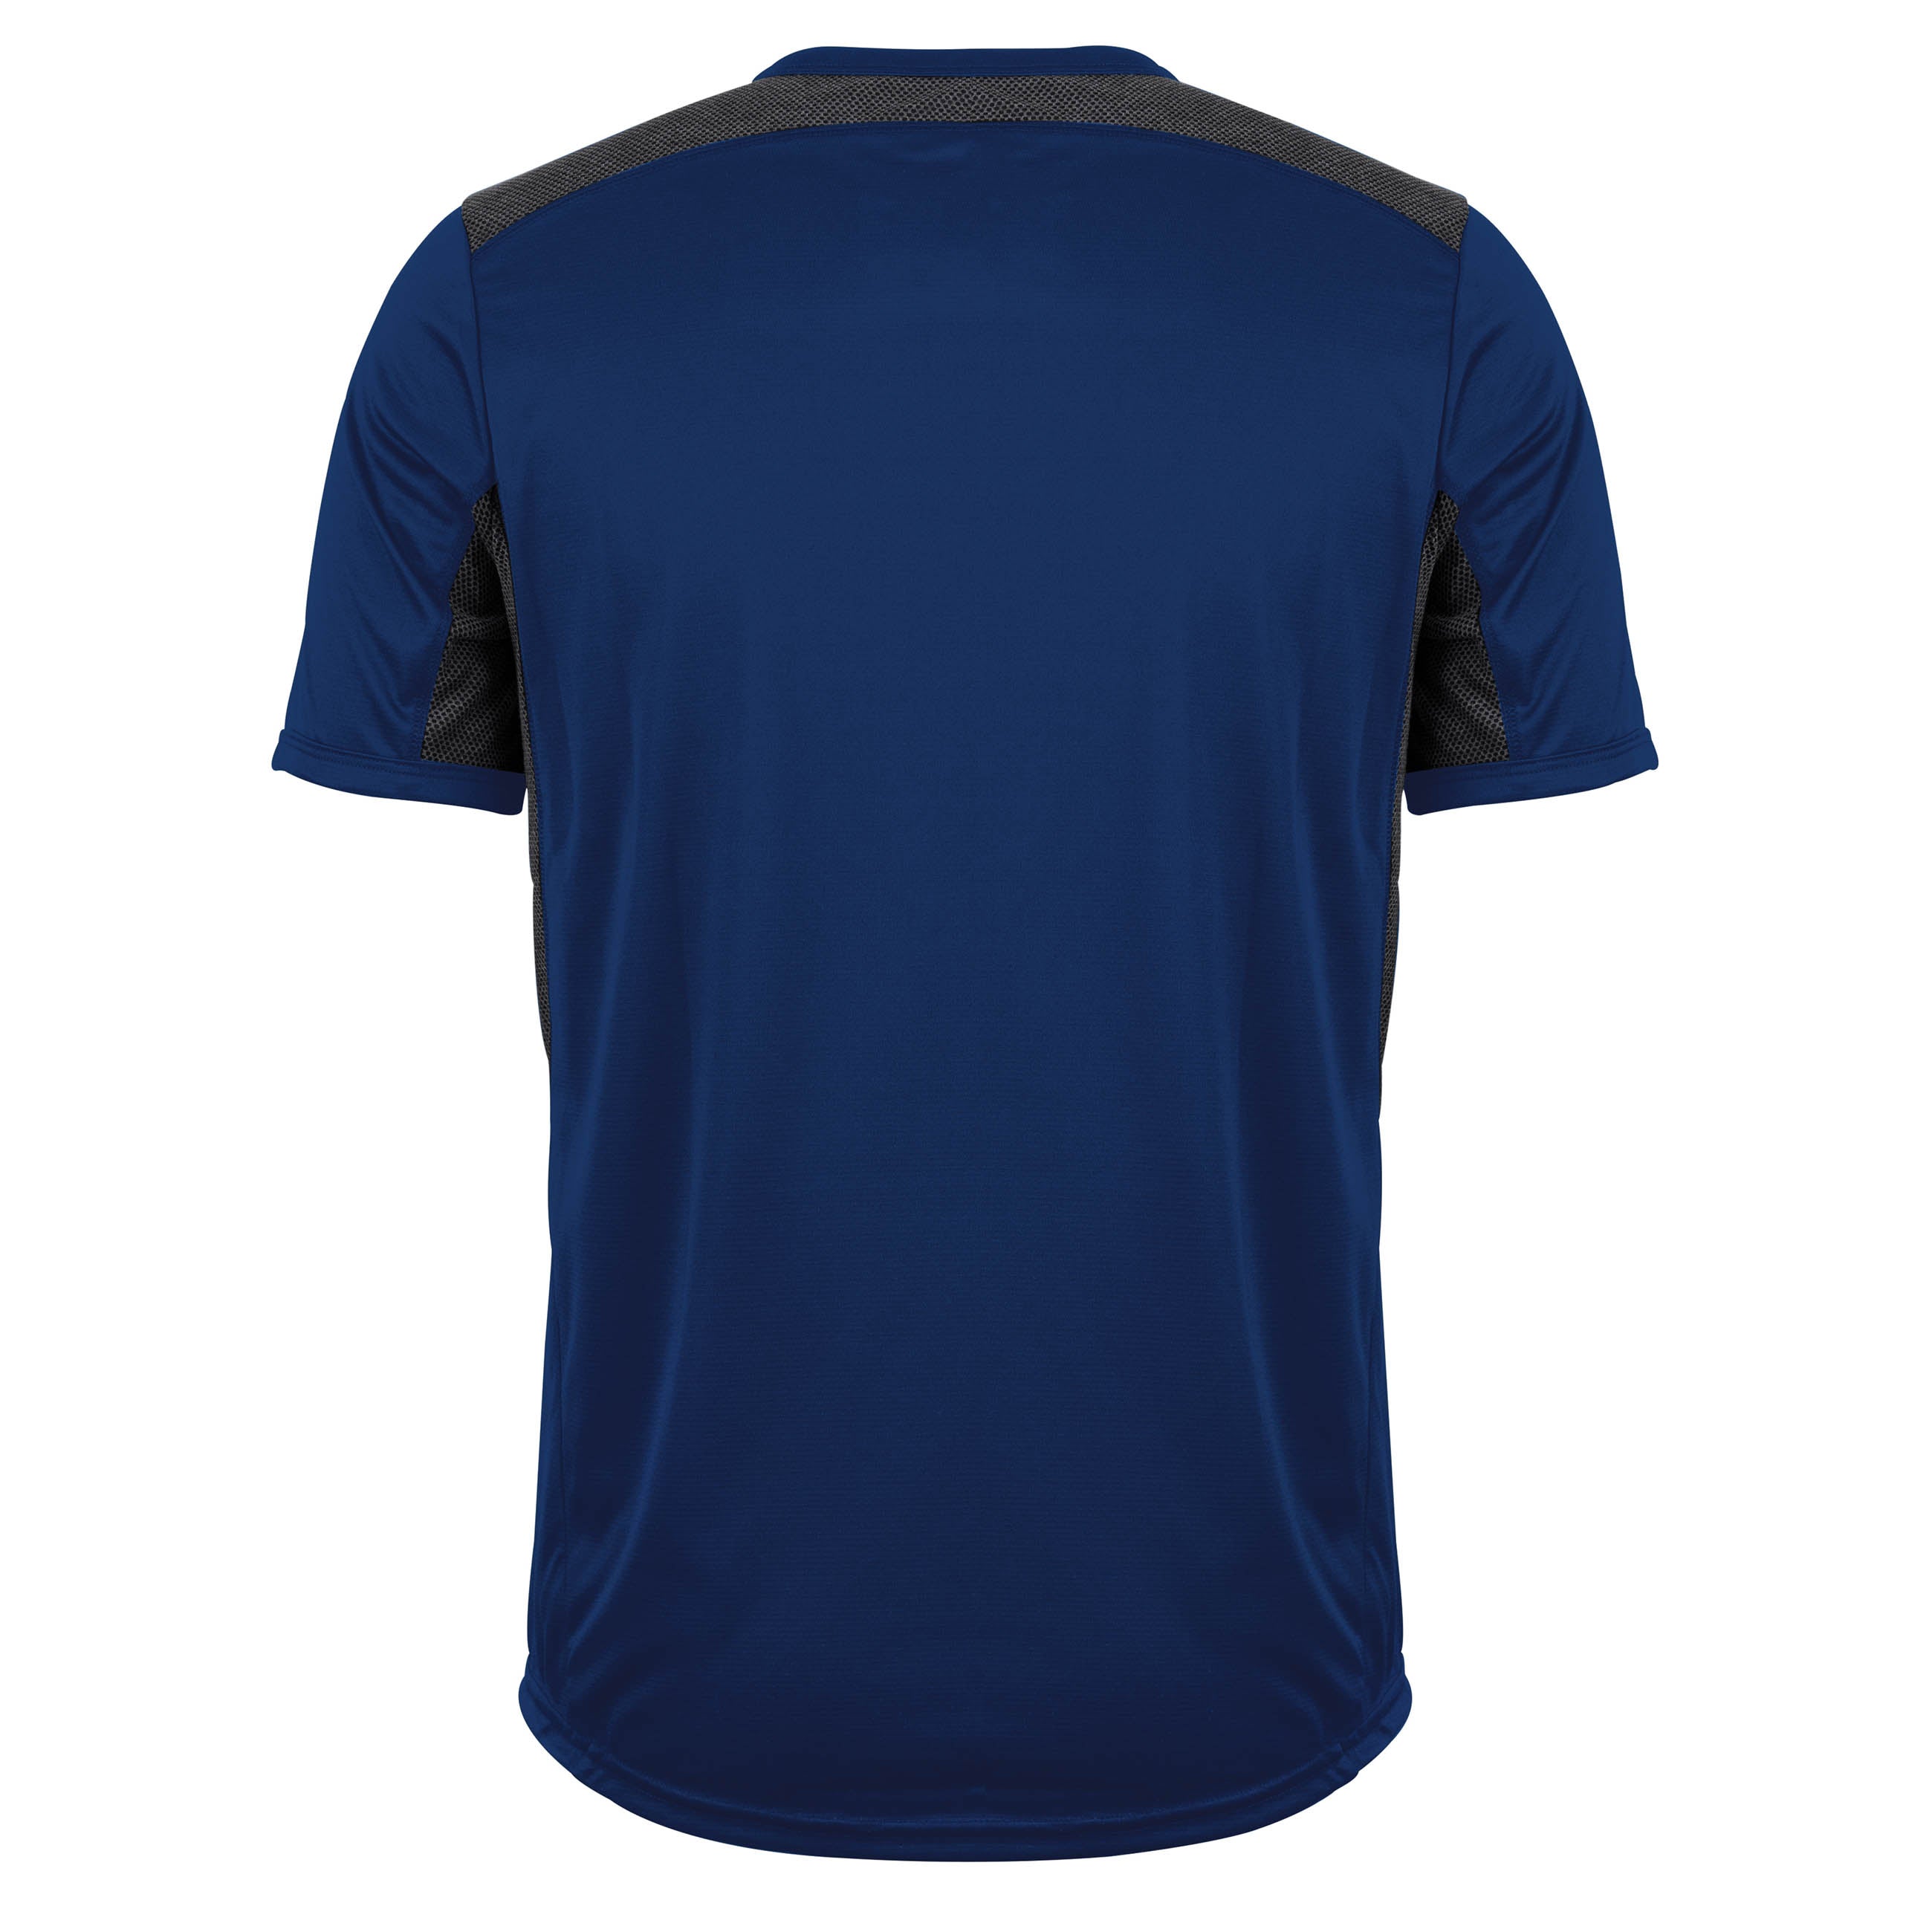 Pro Performance Short Sleeve Men's T-Shirt